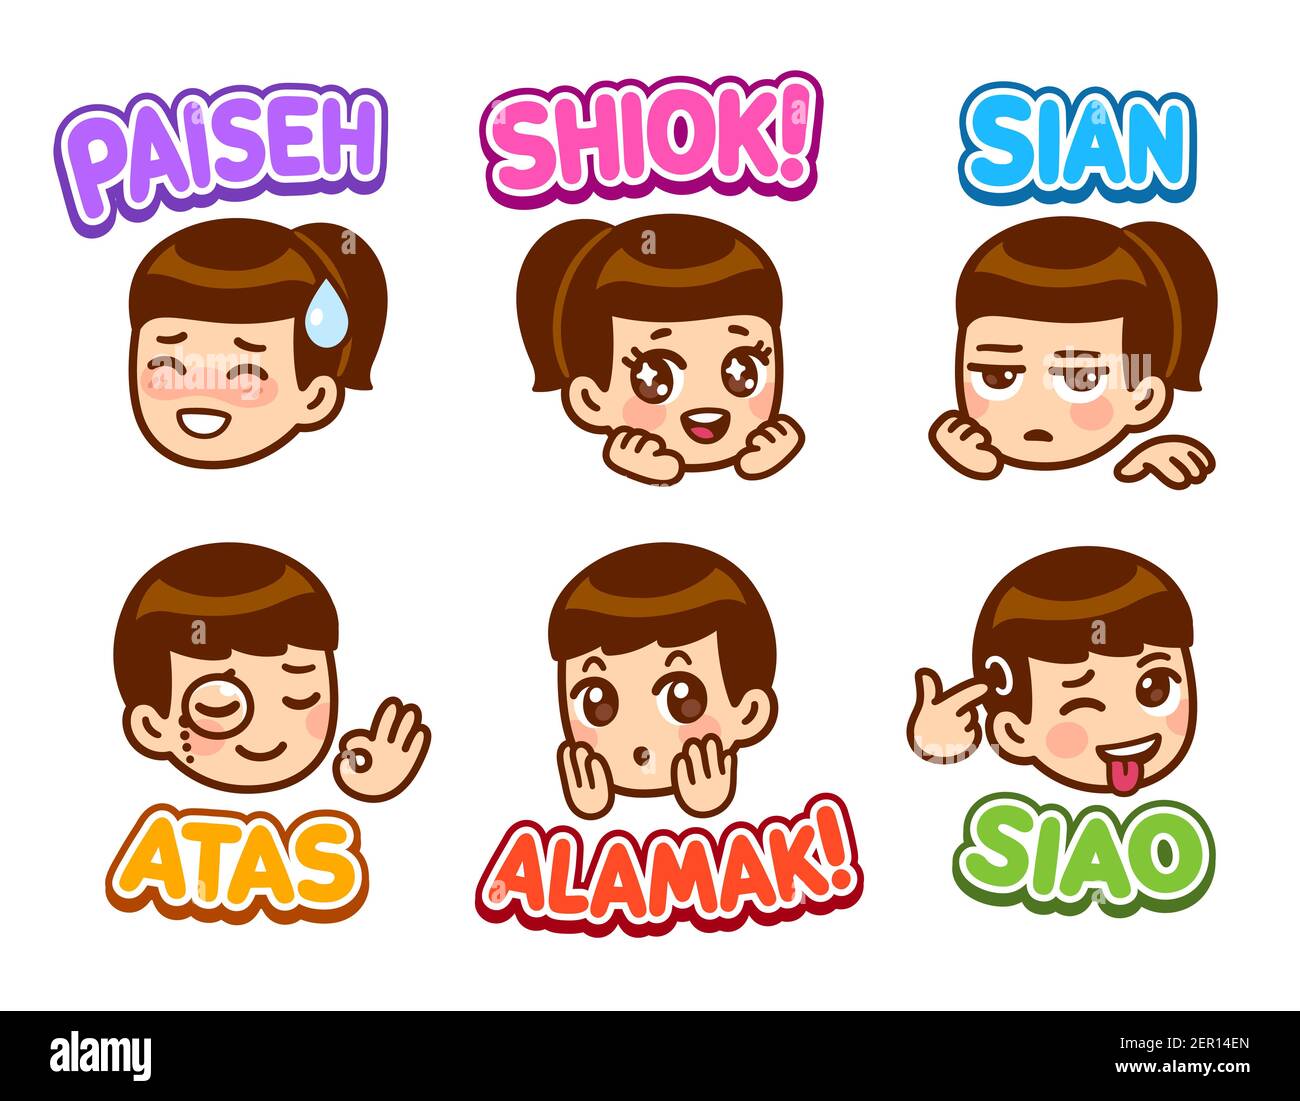 Singlish, Colloquial Singaporean English. Cute cartoon anime boy and girl showing slang words. Stock Vector